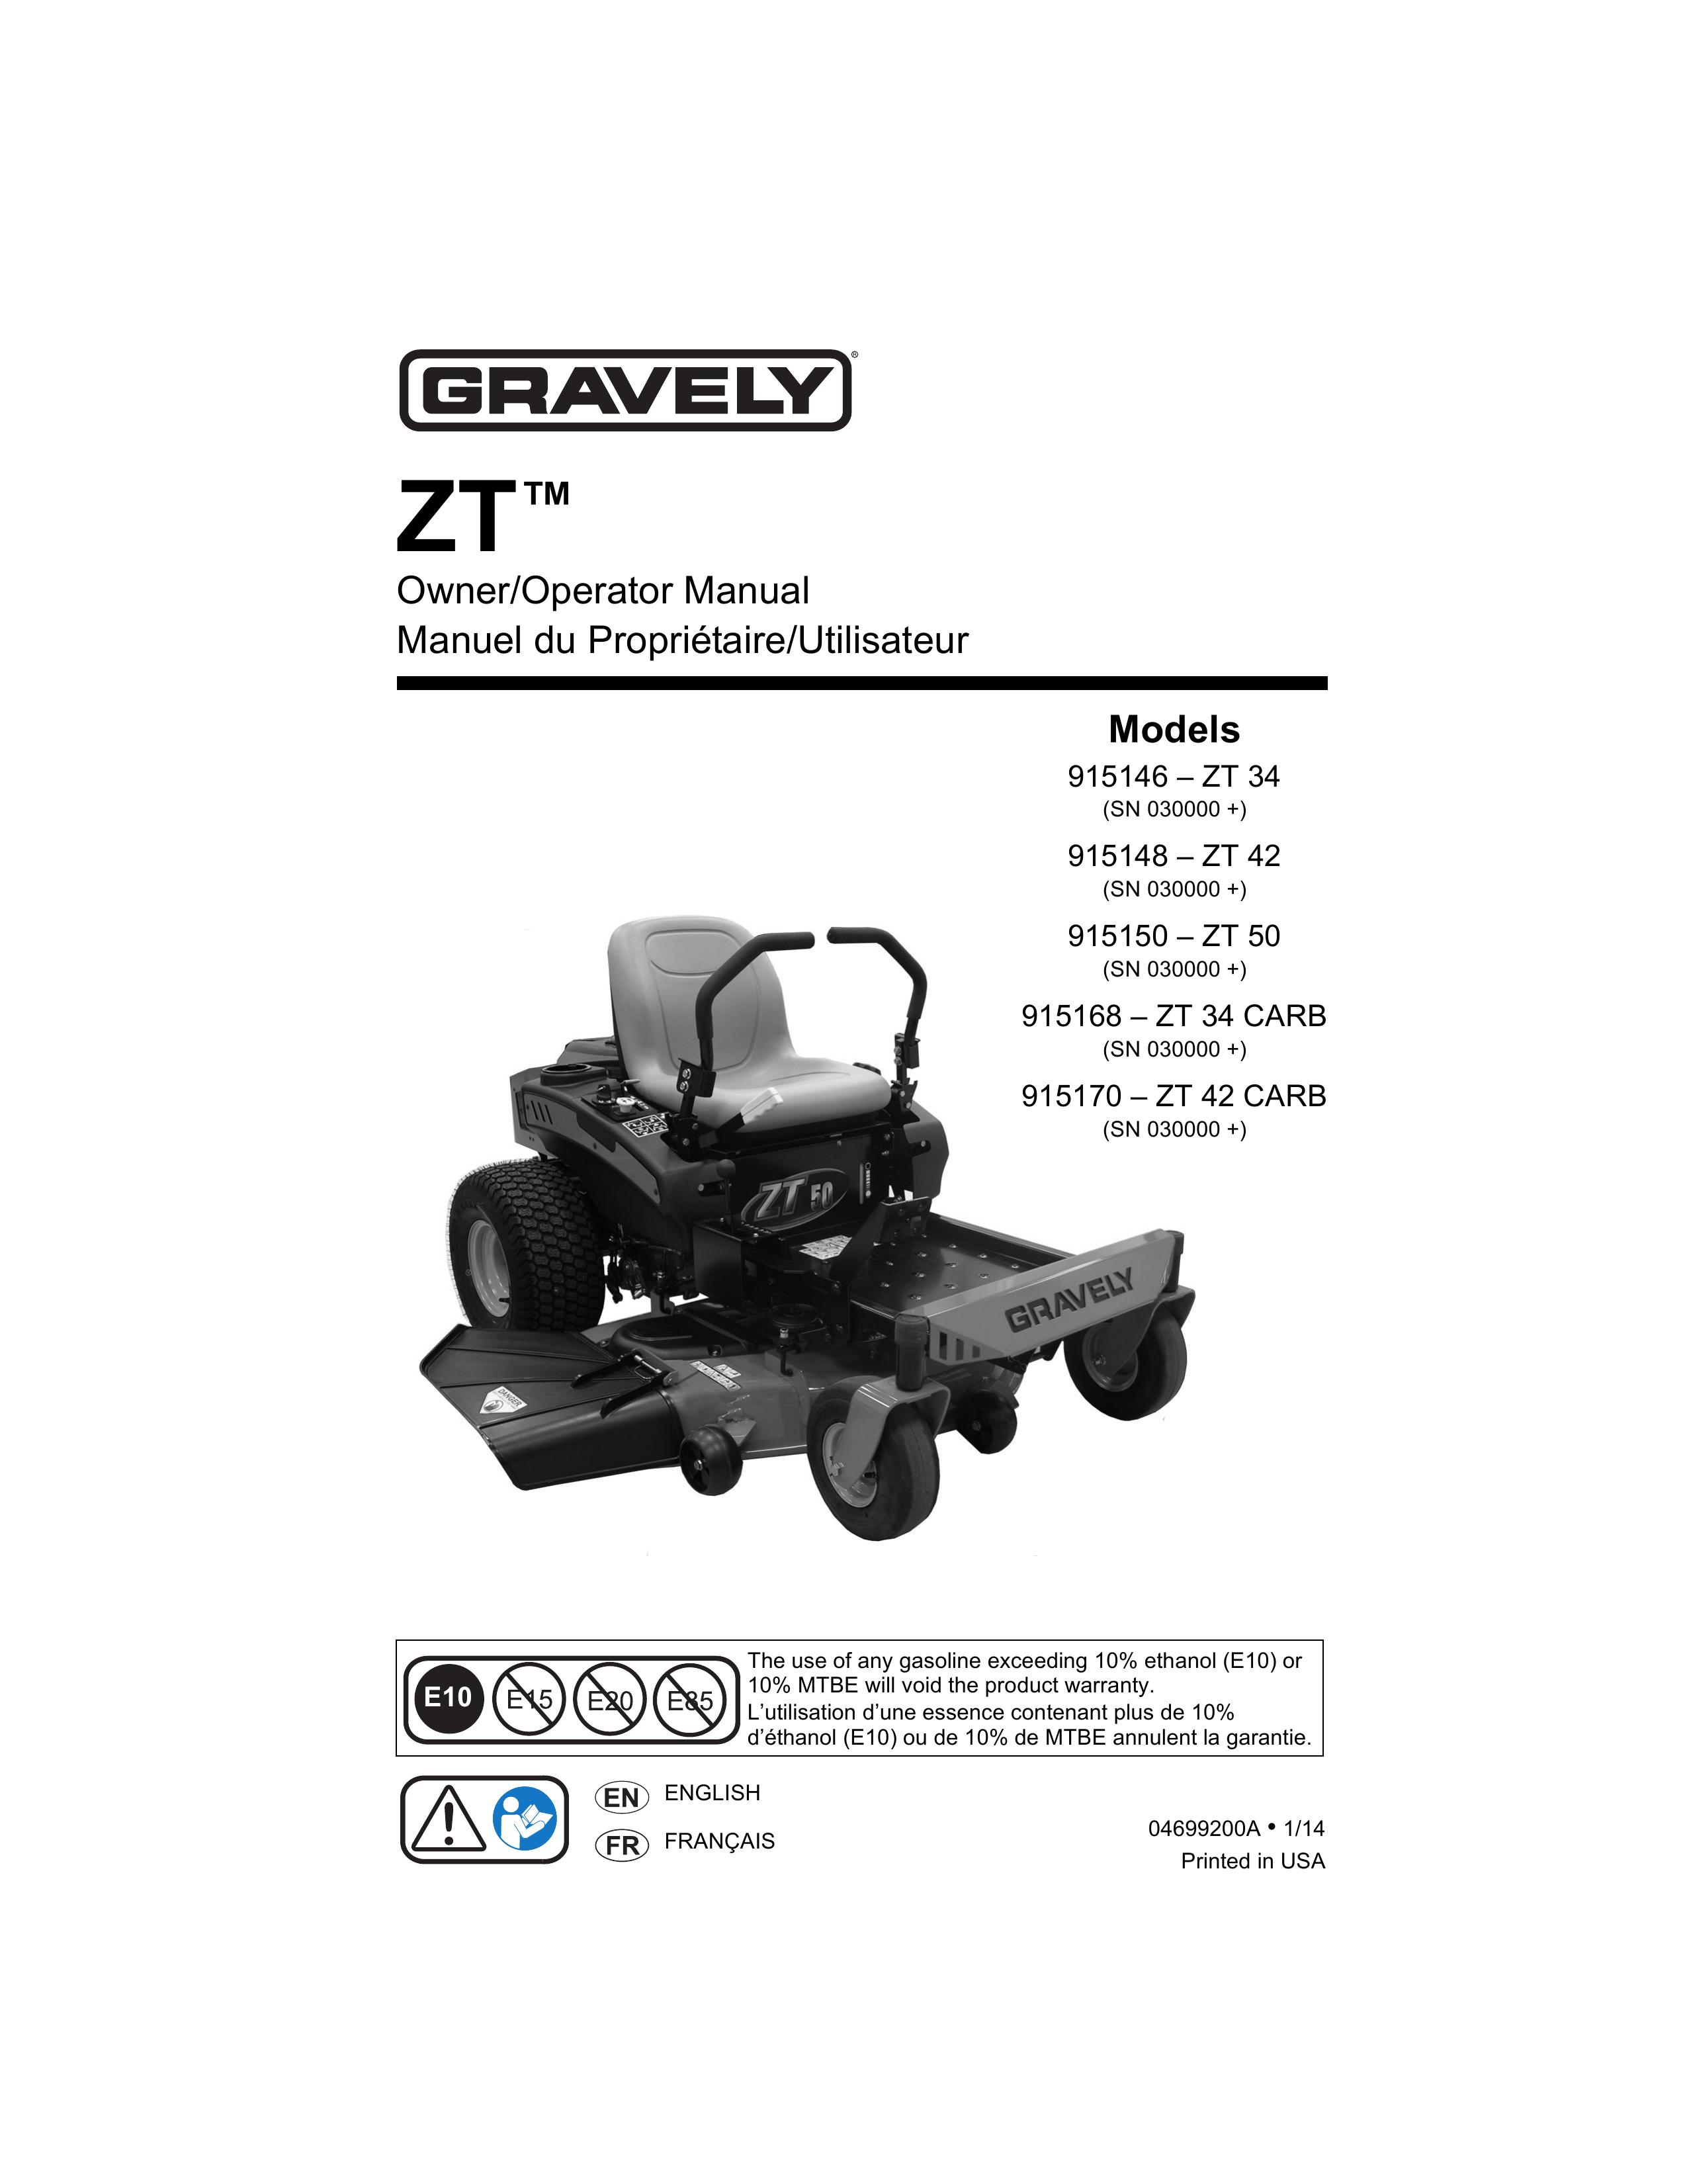 Gravely 915148 ZT 42 Lawn Mower User Manual